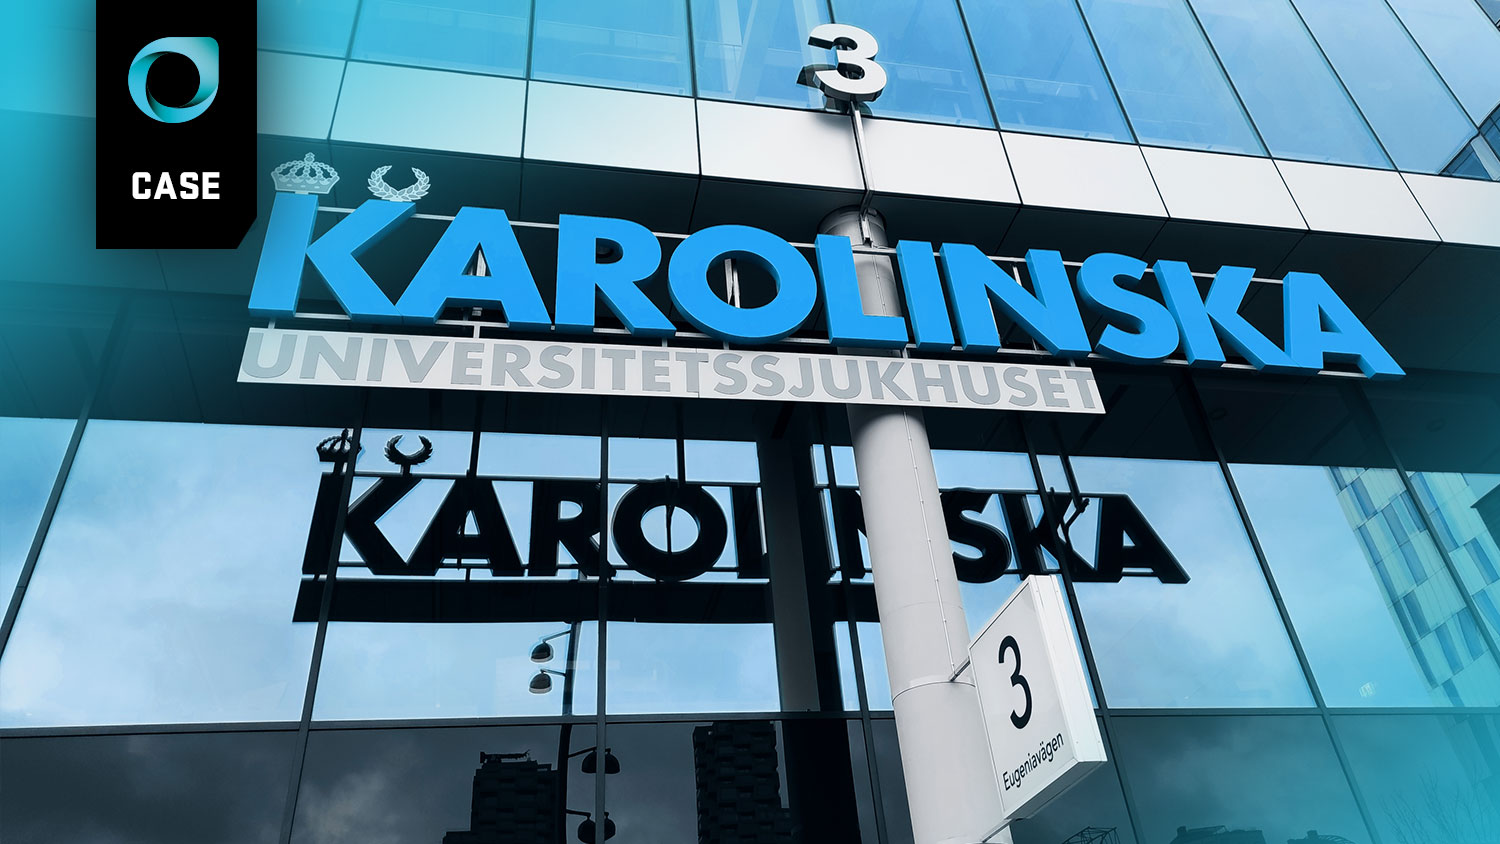 Karolinska University Hospital has a new dispatcher for its security center